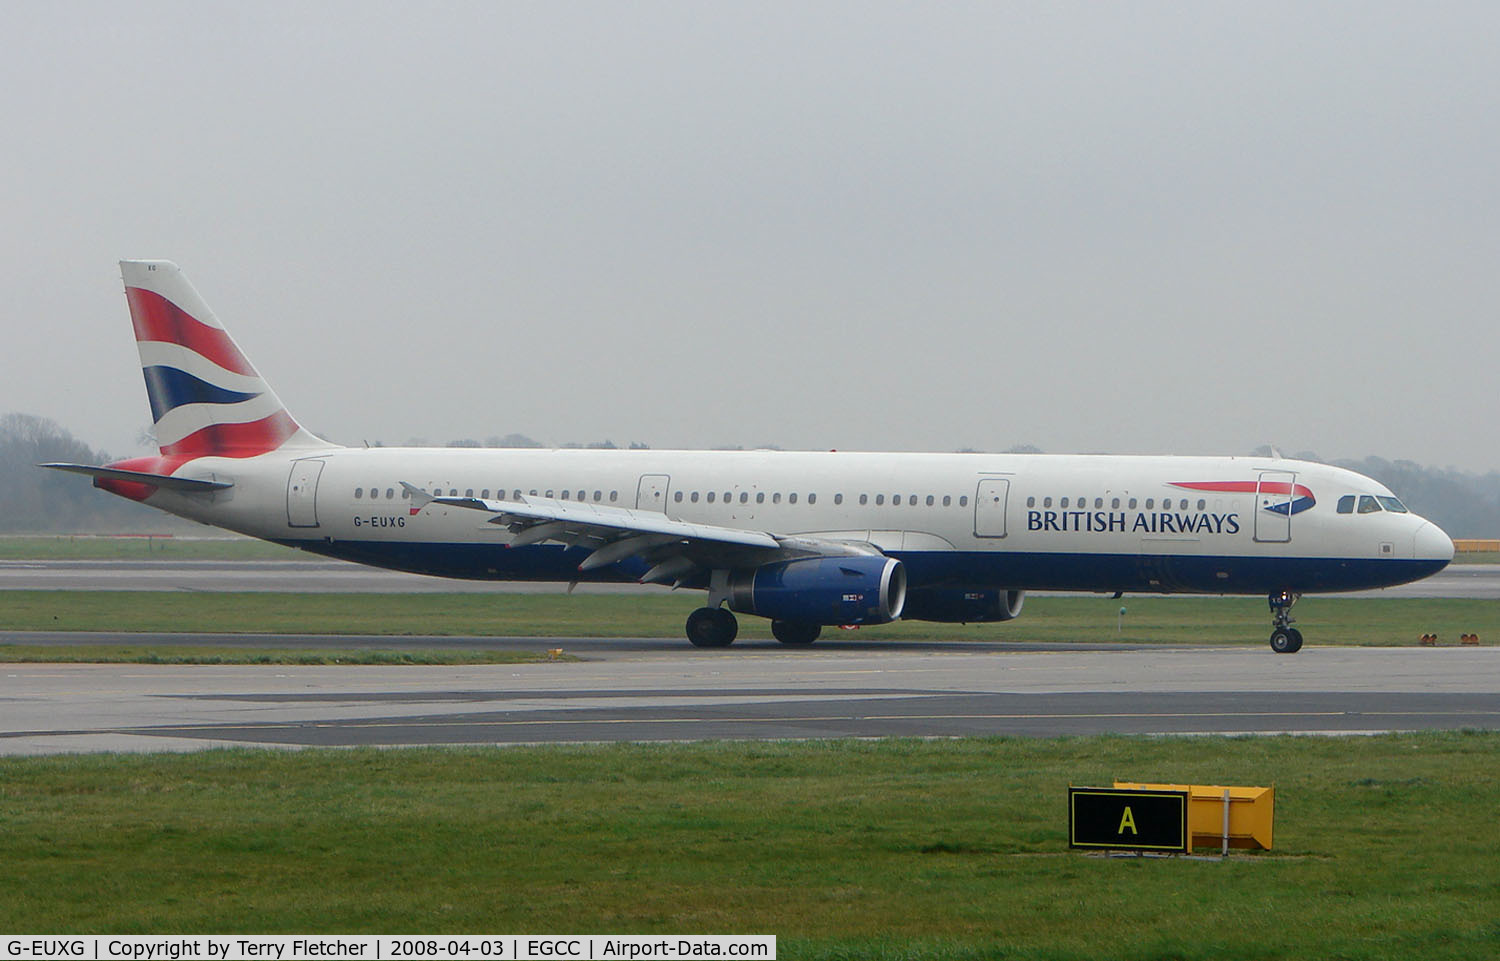 G-EUXG, 2004 Airbus A321-231 C/N 2351, British Airways A321 arrives at Manchester